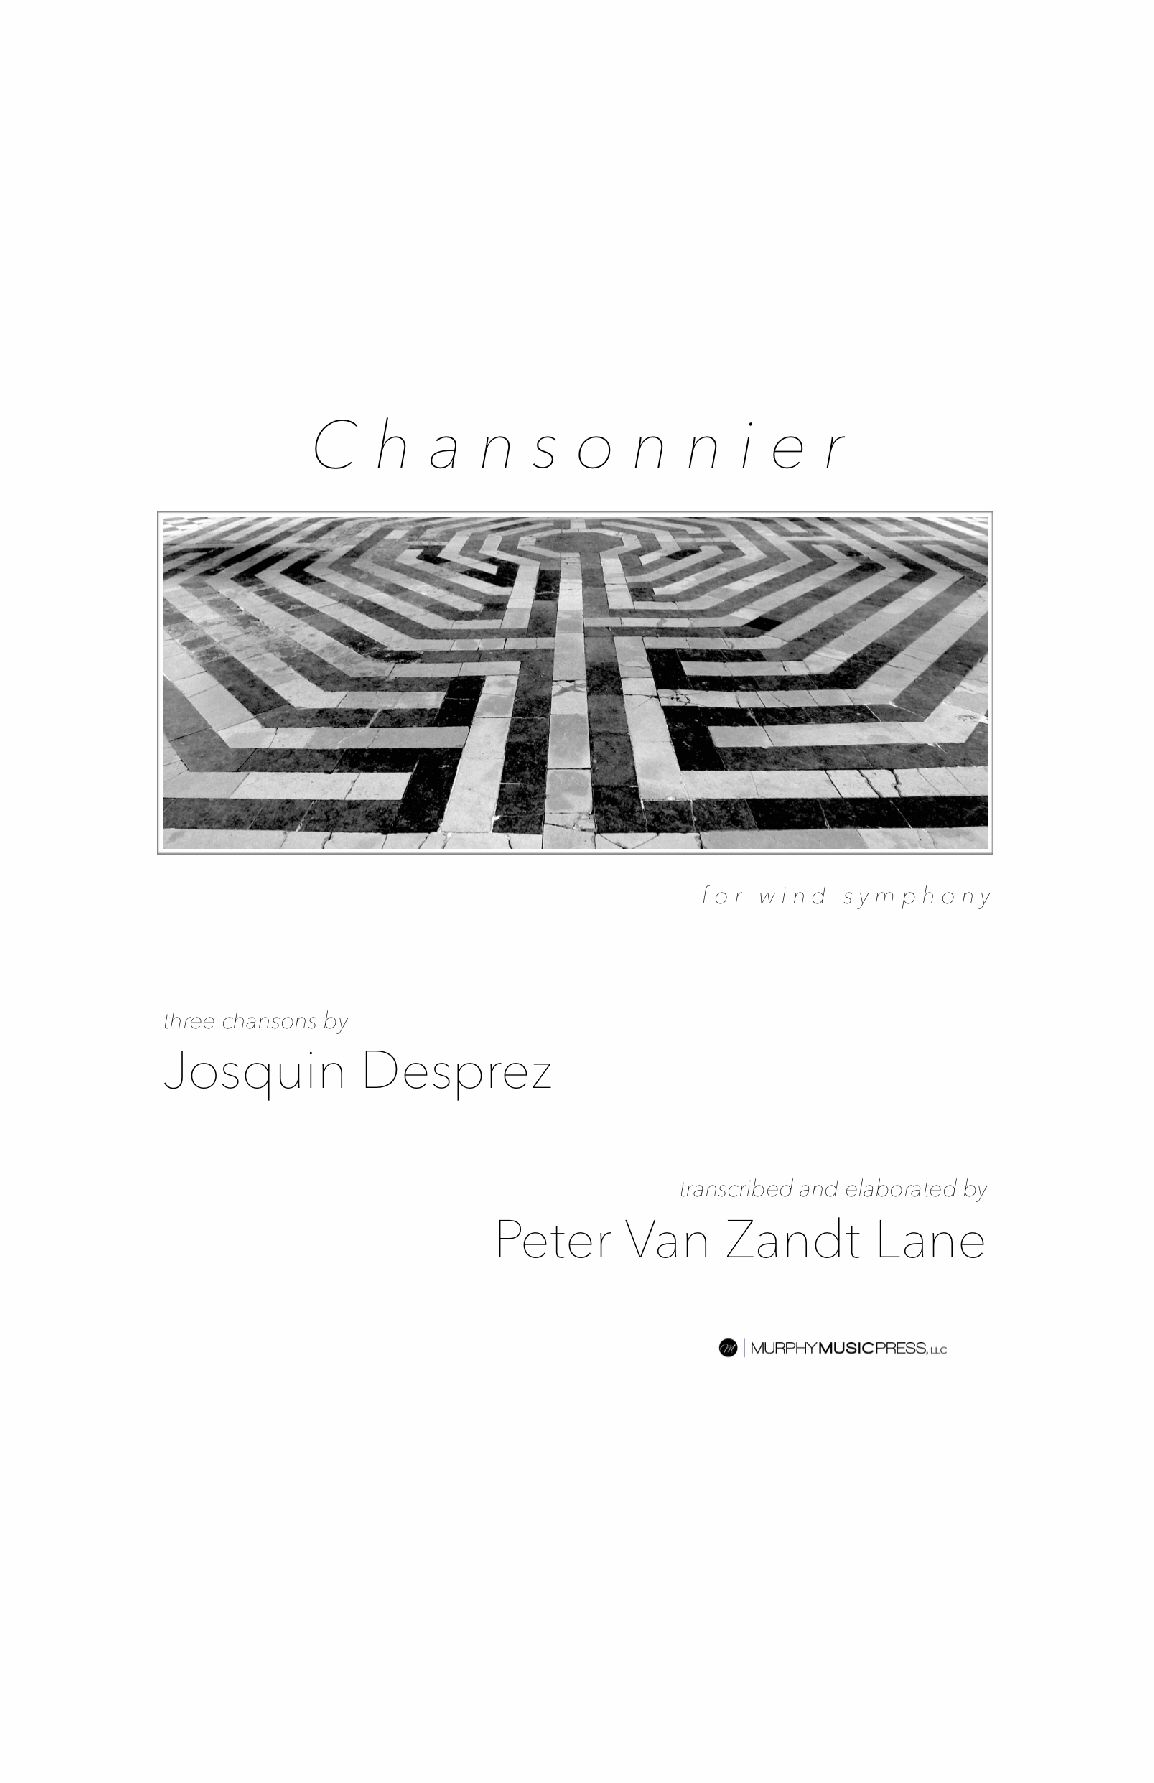 Chansonnier (Score Only) by Peter Van Zandt Lane